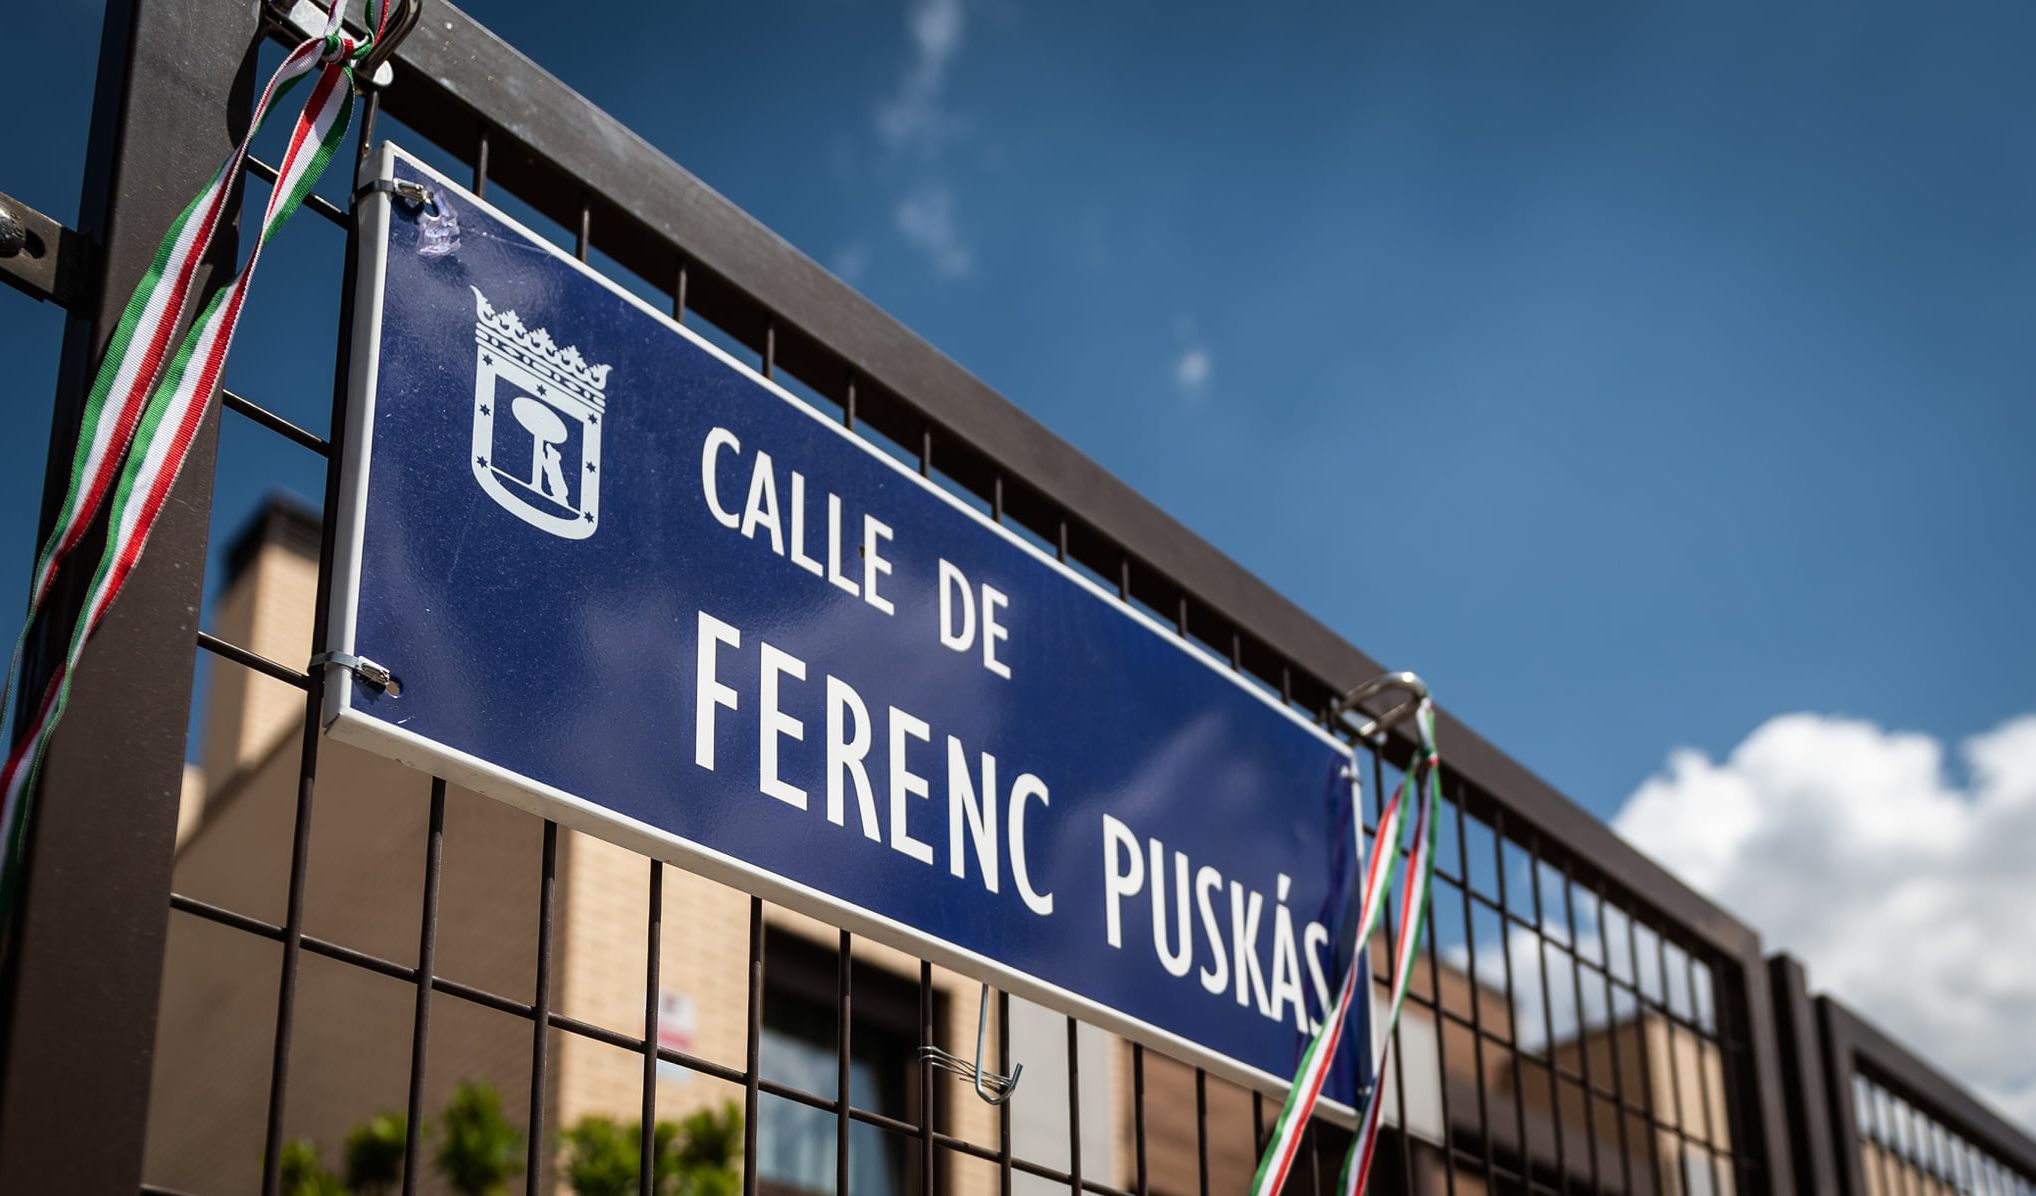 Street Named After Football Legend Puskás Opened in Madrid